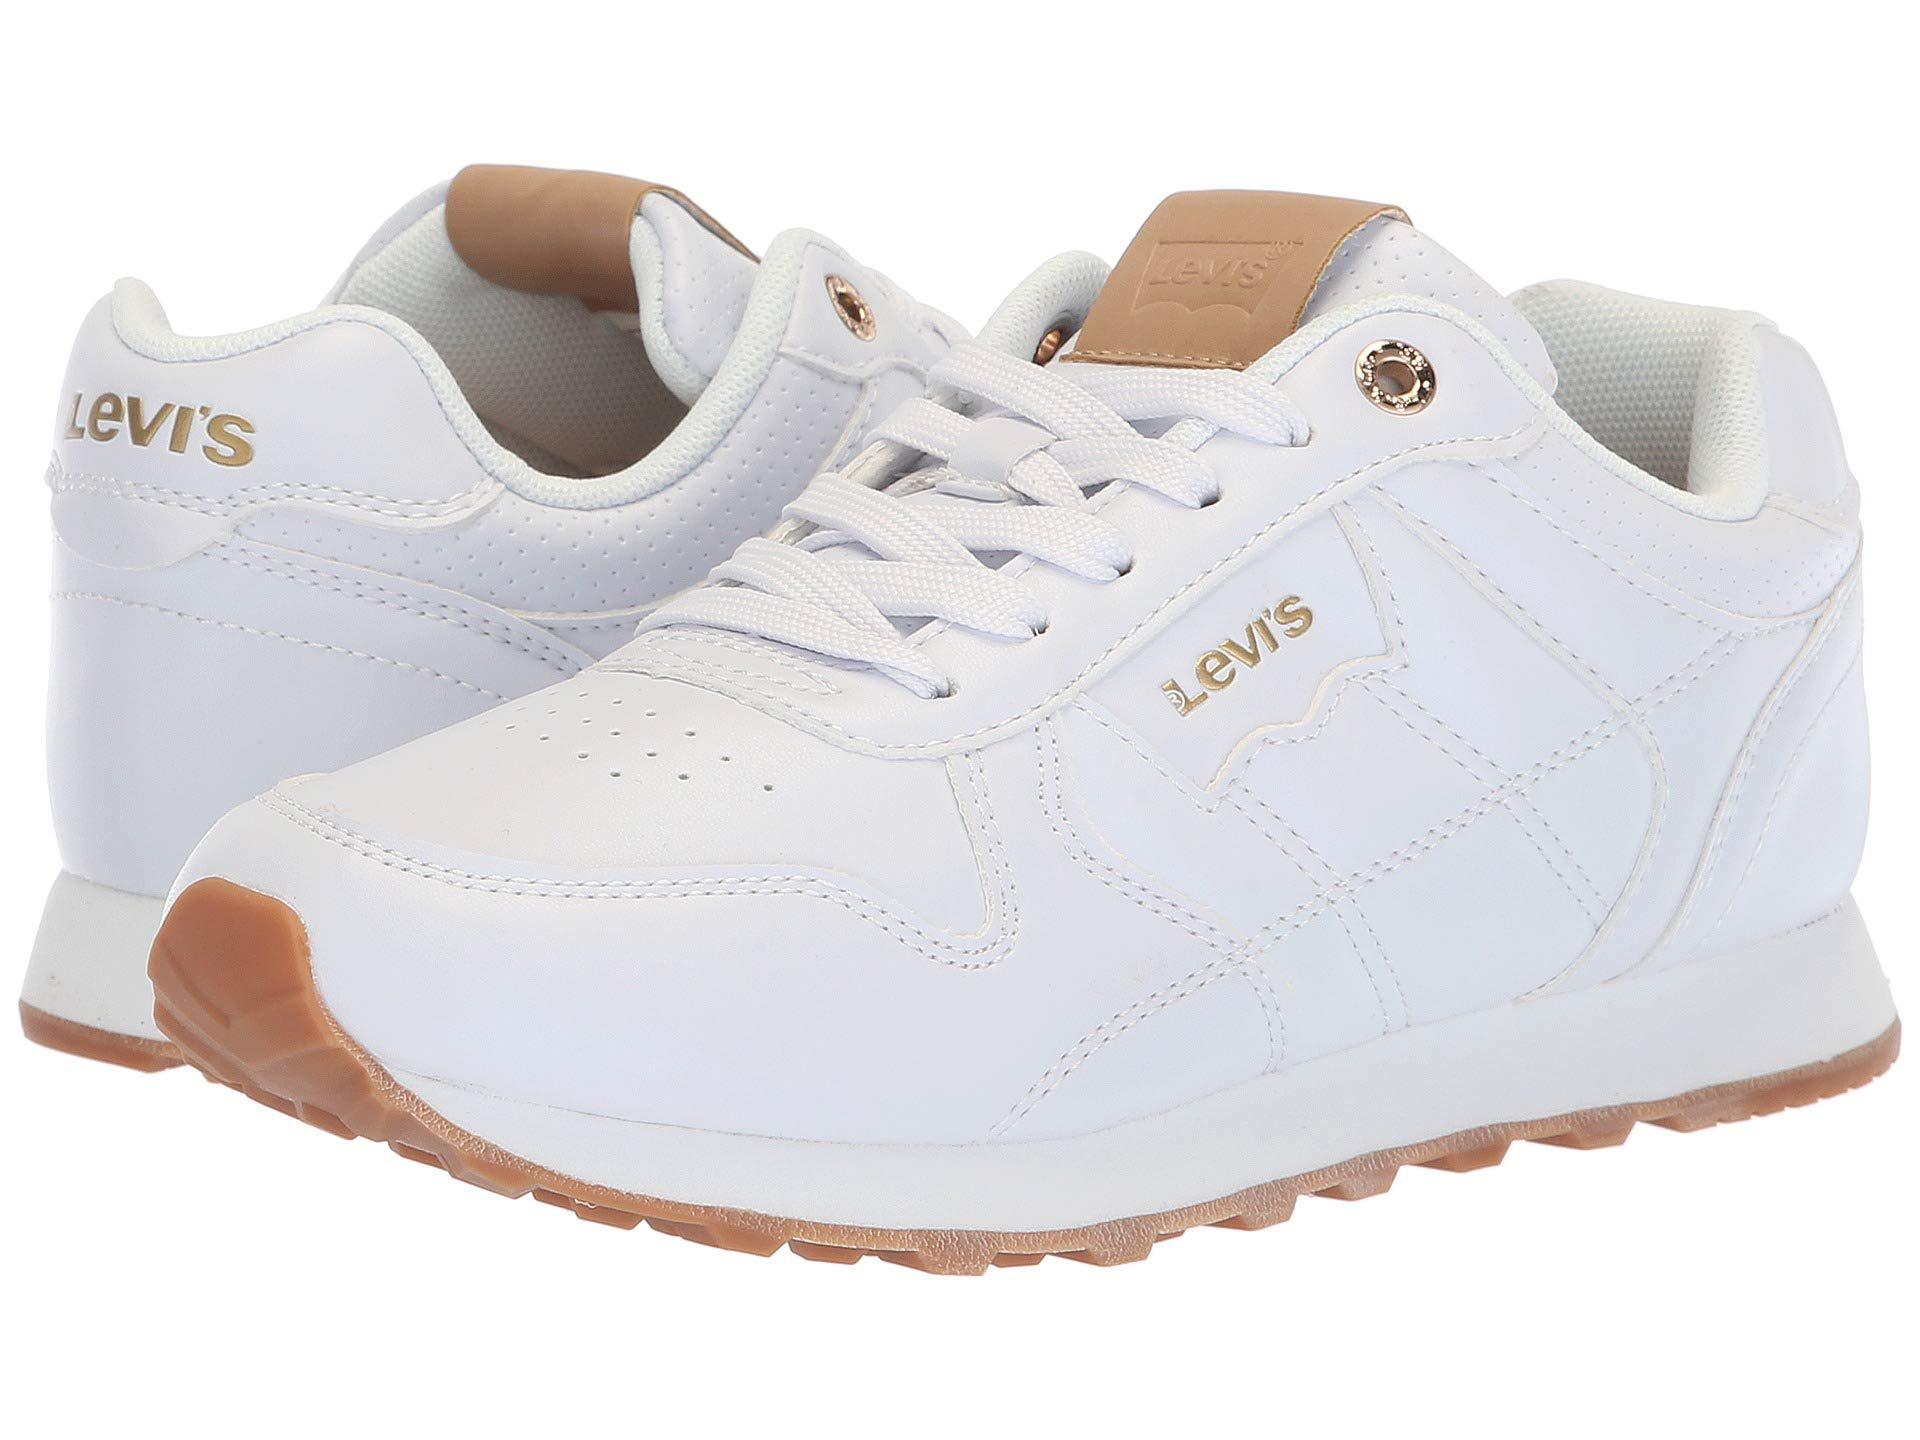 Levis White Sneakers For Men | lupon.gov.ph